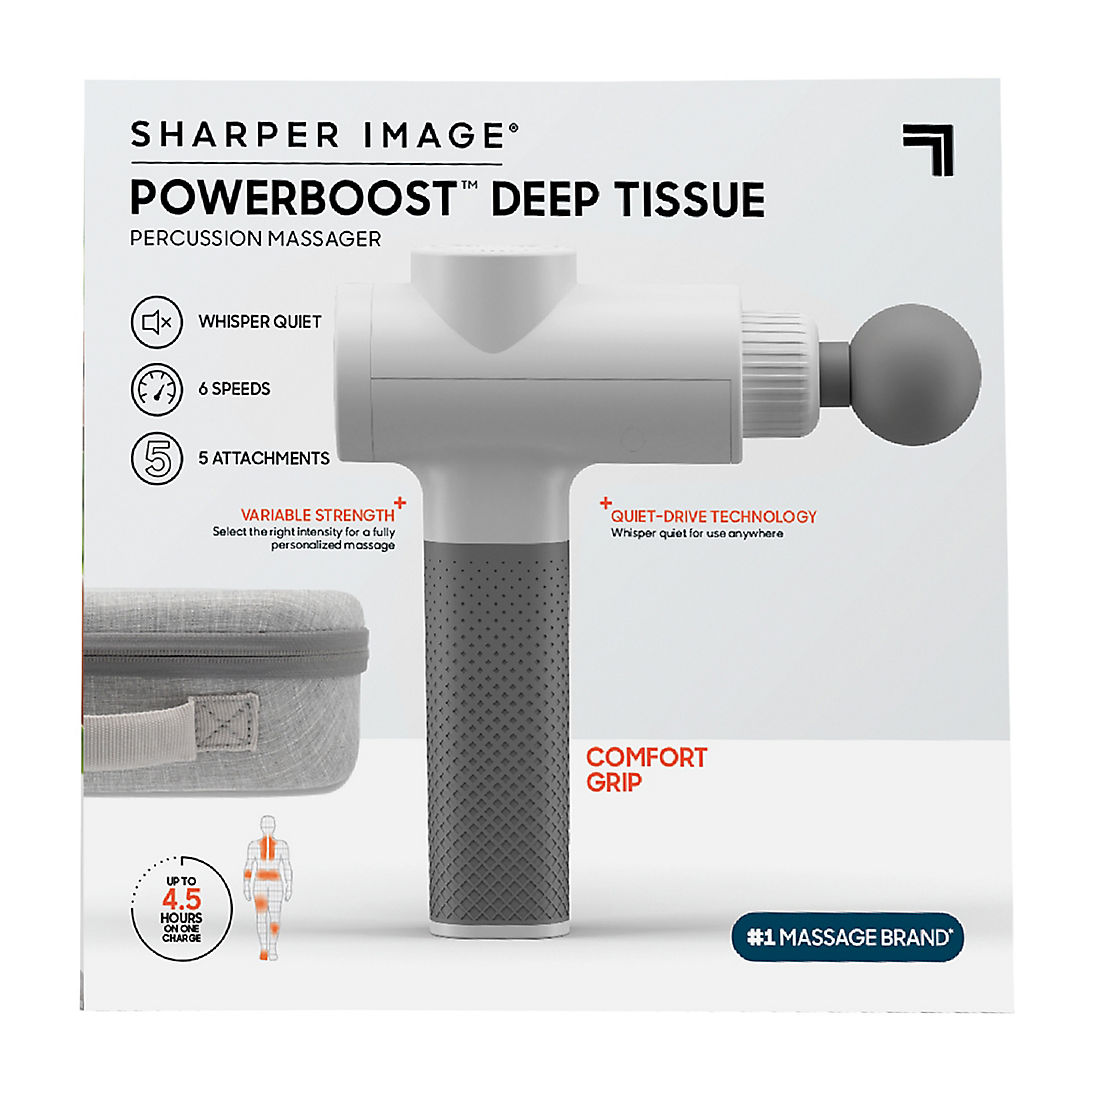 Sharper Image Powerboost Deep Tissue Percussion Massager